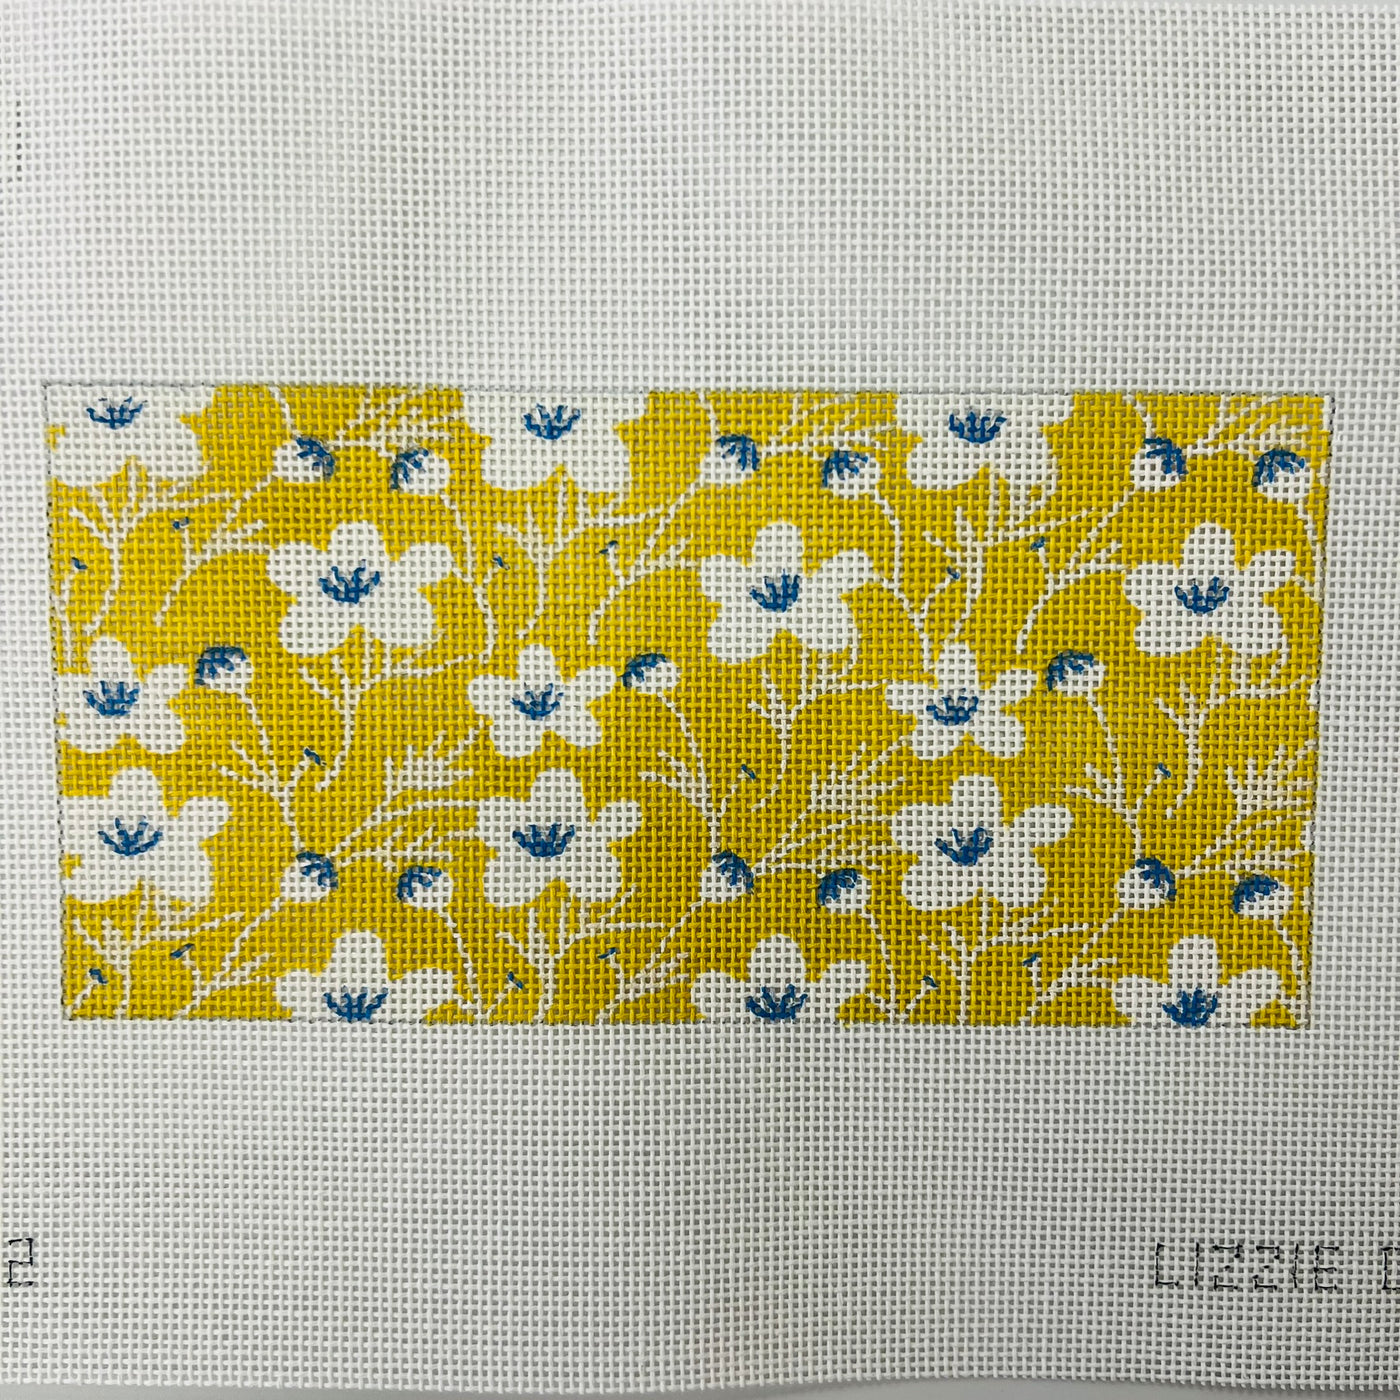 Flowers on Blue Eyeglass Case Needlepoint Canvas